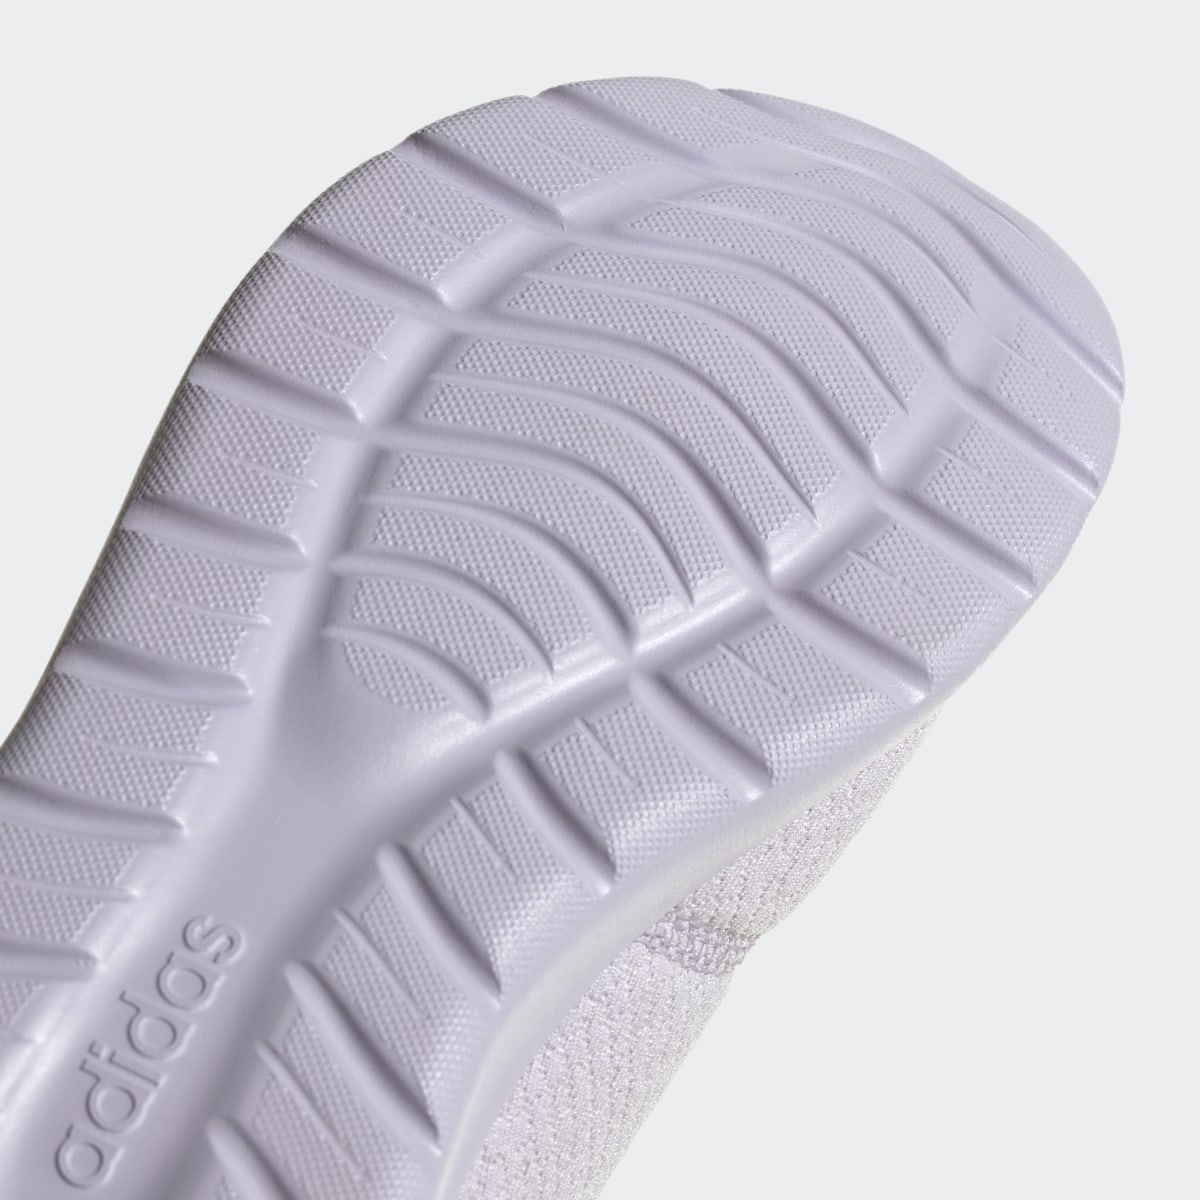 Adidas Cloudfoam Pure 2.0 Shoes. 9